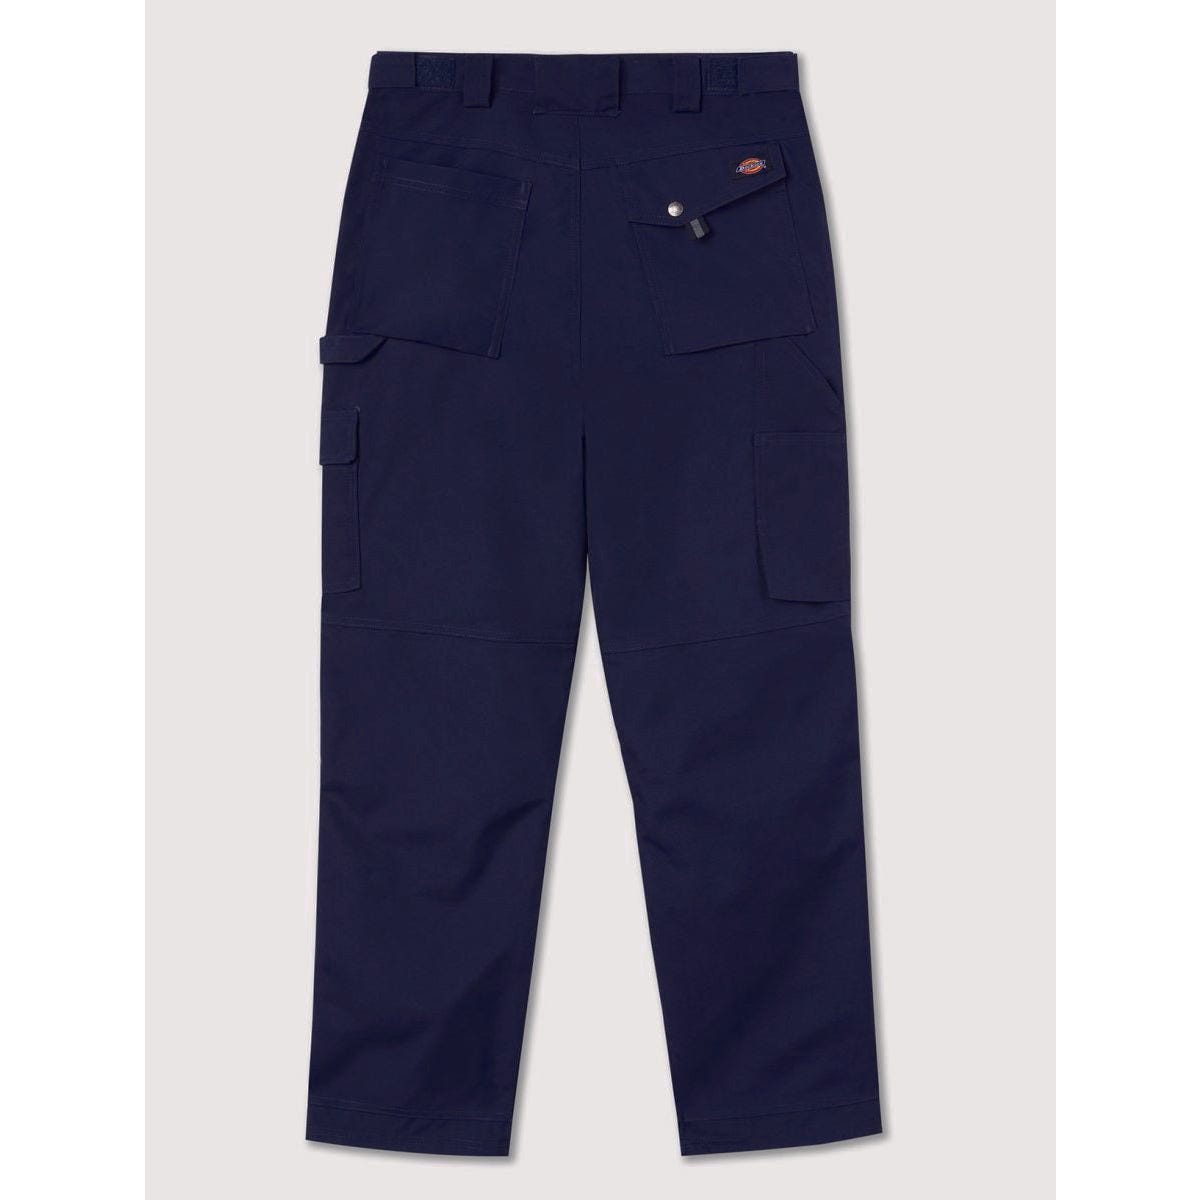 Pantalon Eisenhower multi-poches Noir - Dickies - Taille 44 7